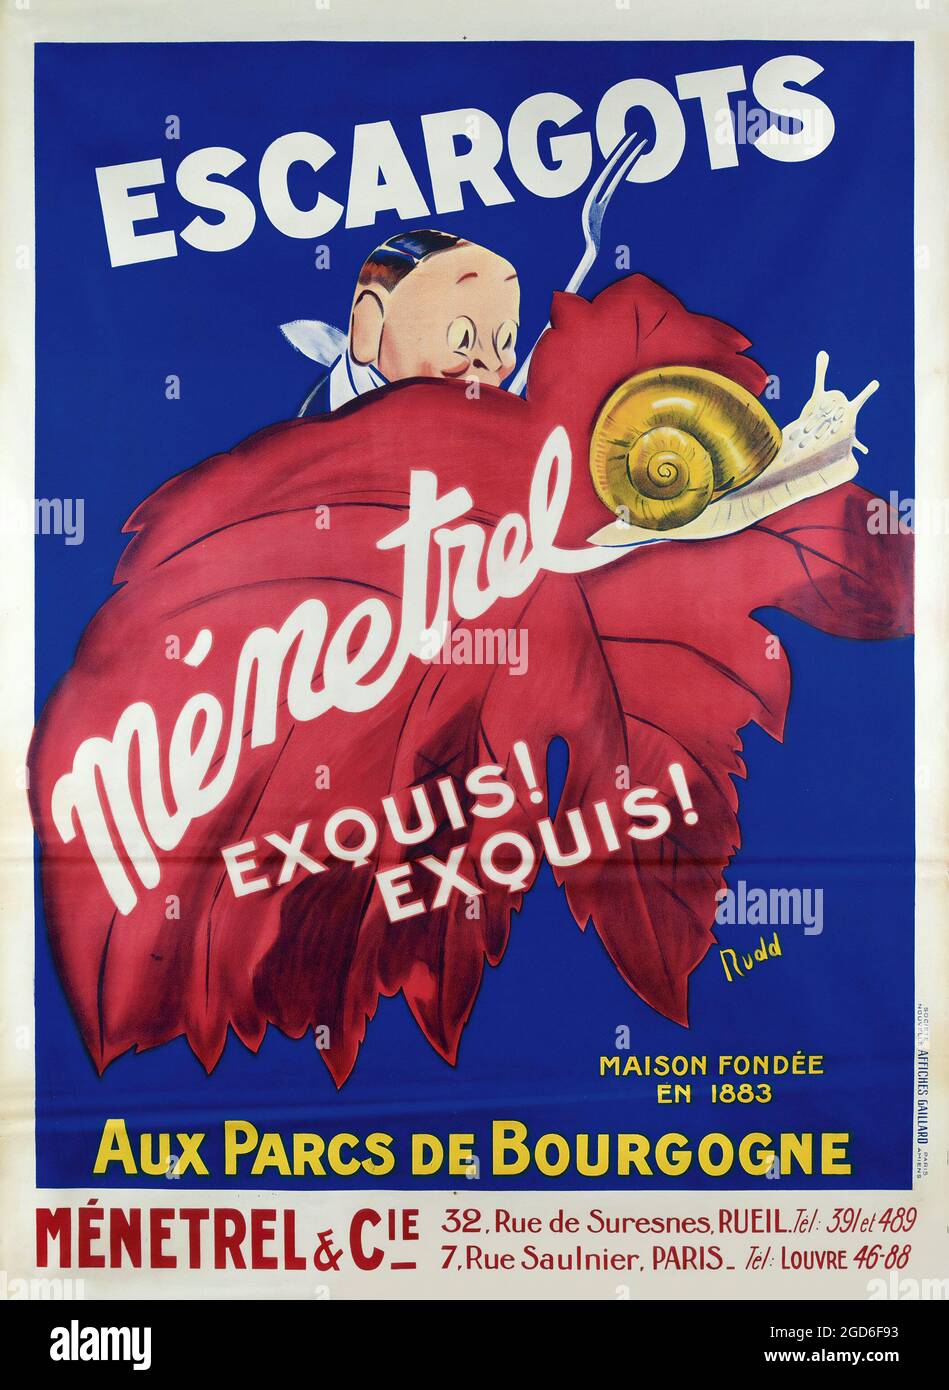 Old and vintage advertisement / poster. Escargots Menetrel, 1926. France. Artist: Rudd. Stock Photo